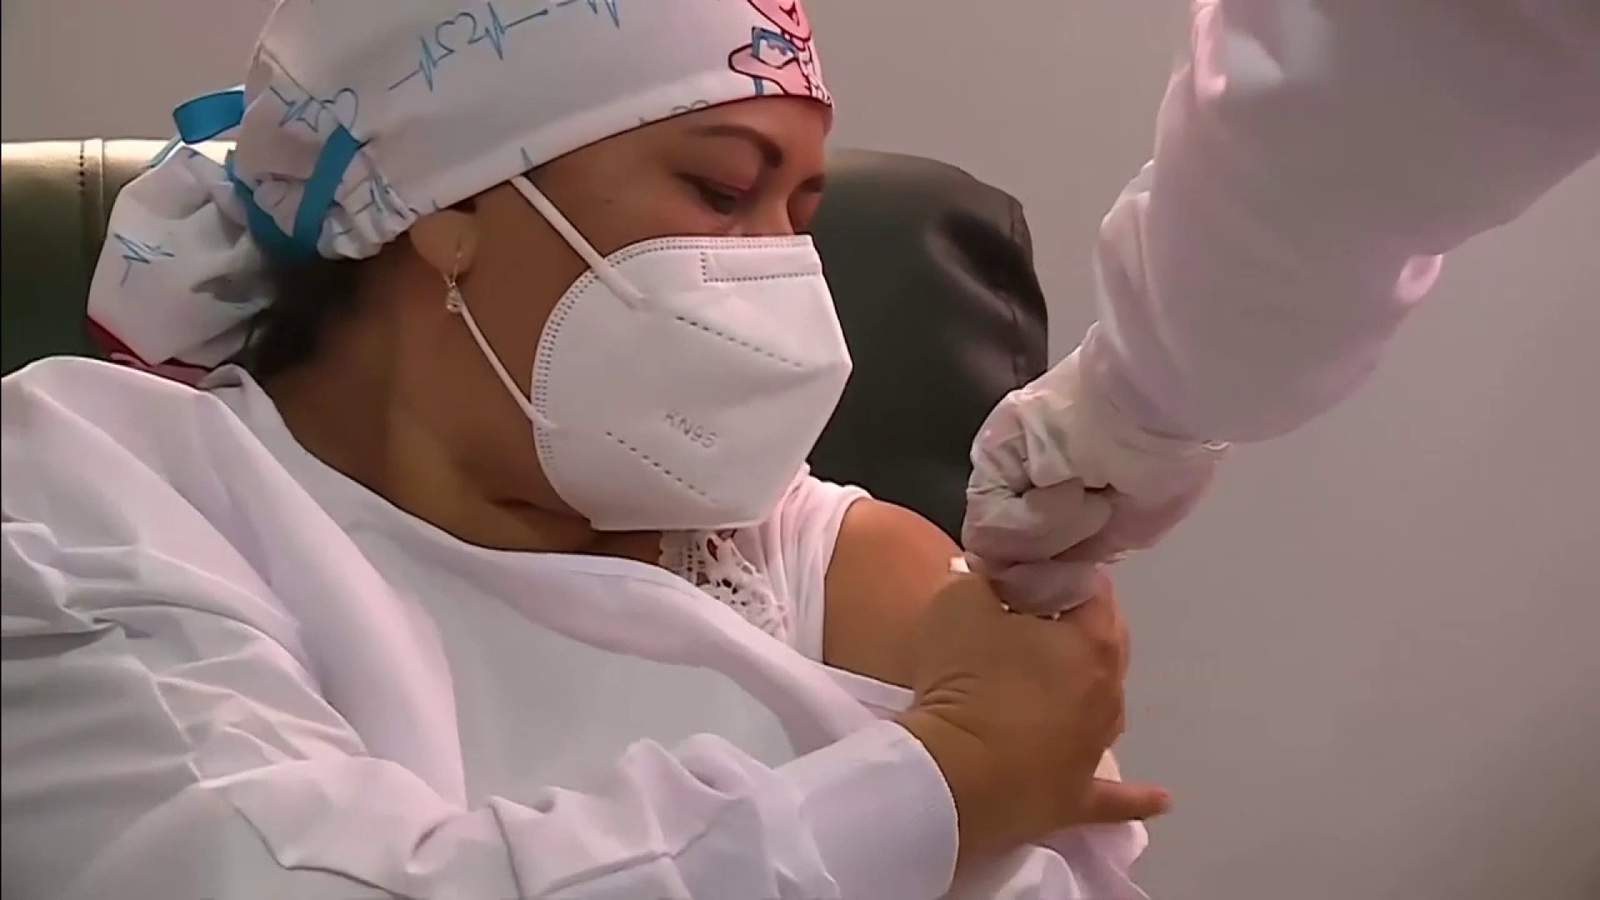 Colombia’s COVID-19 vaccine campaign aims to protect 35 million